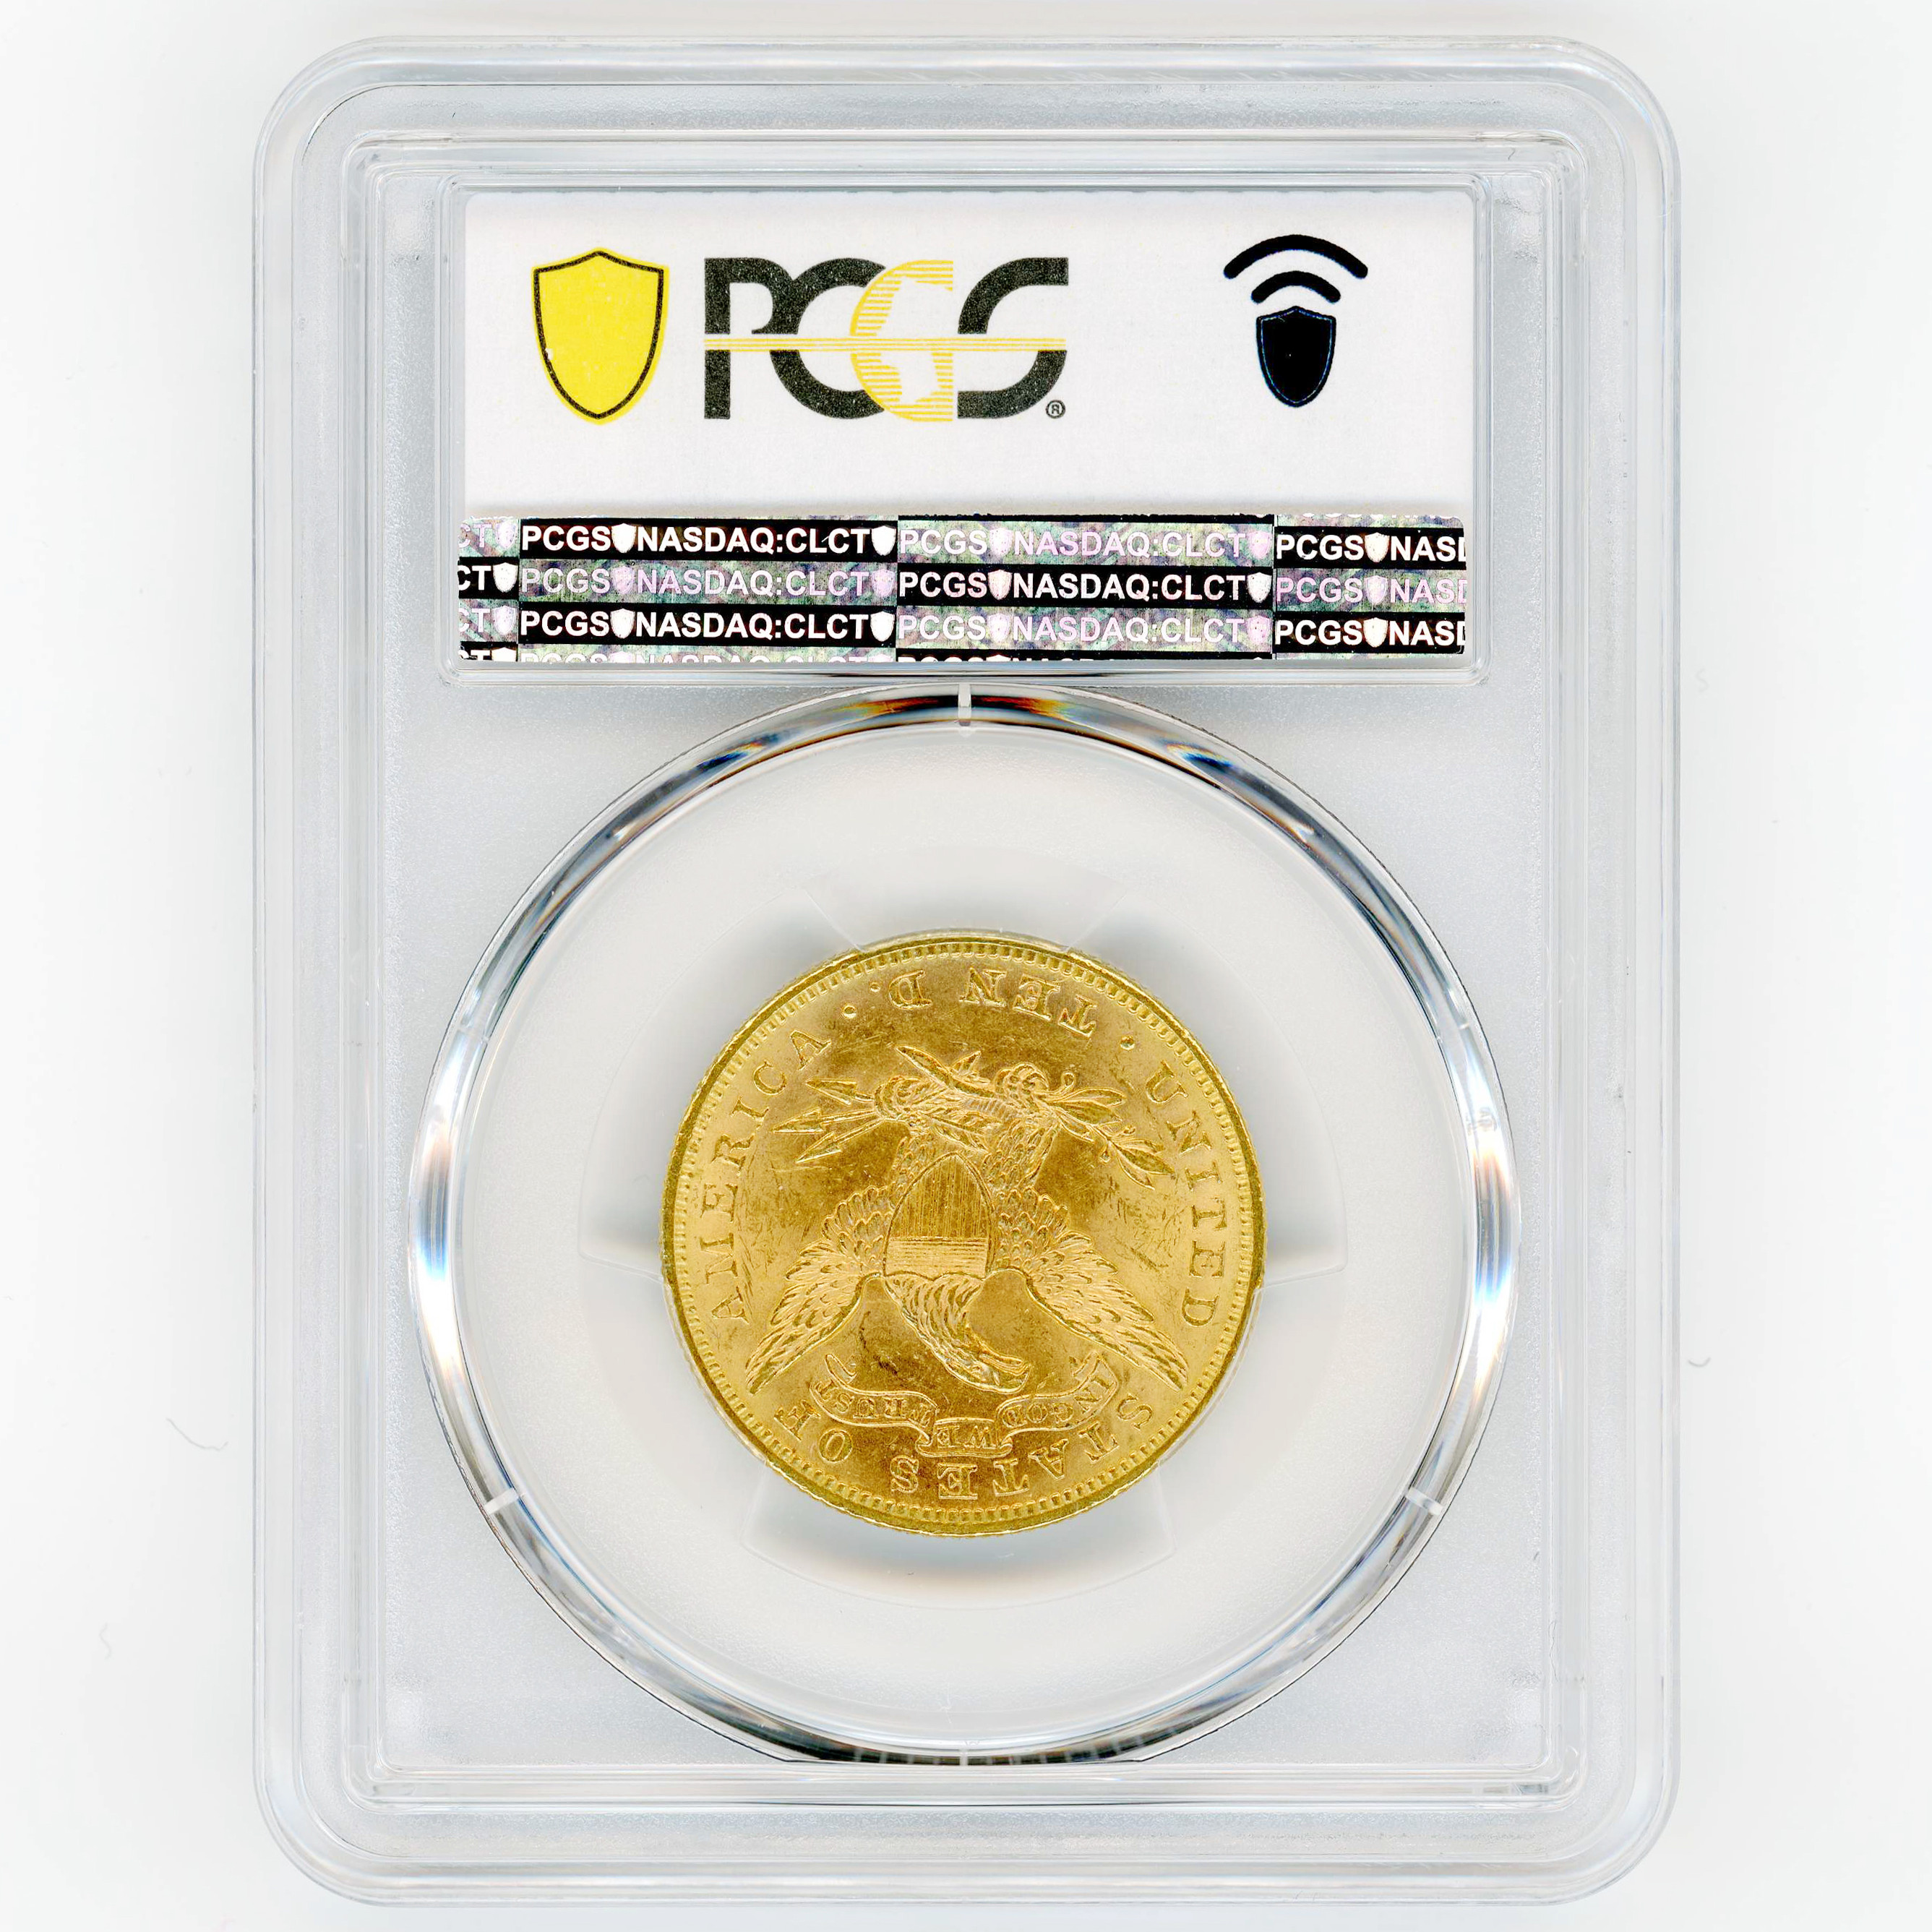 USA - 10 Dollars - 1893 revers